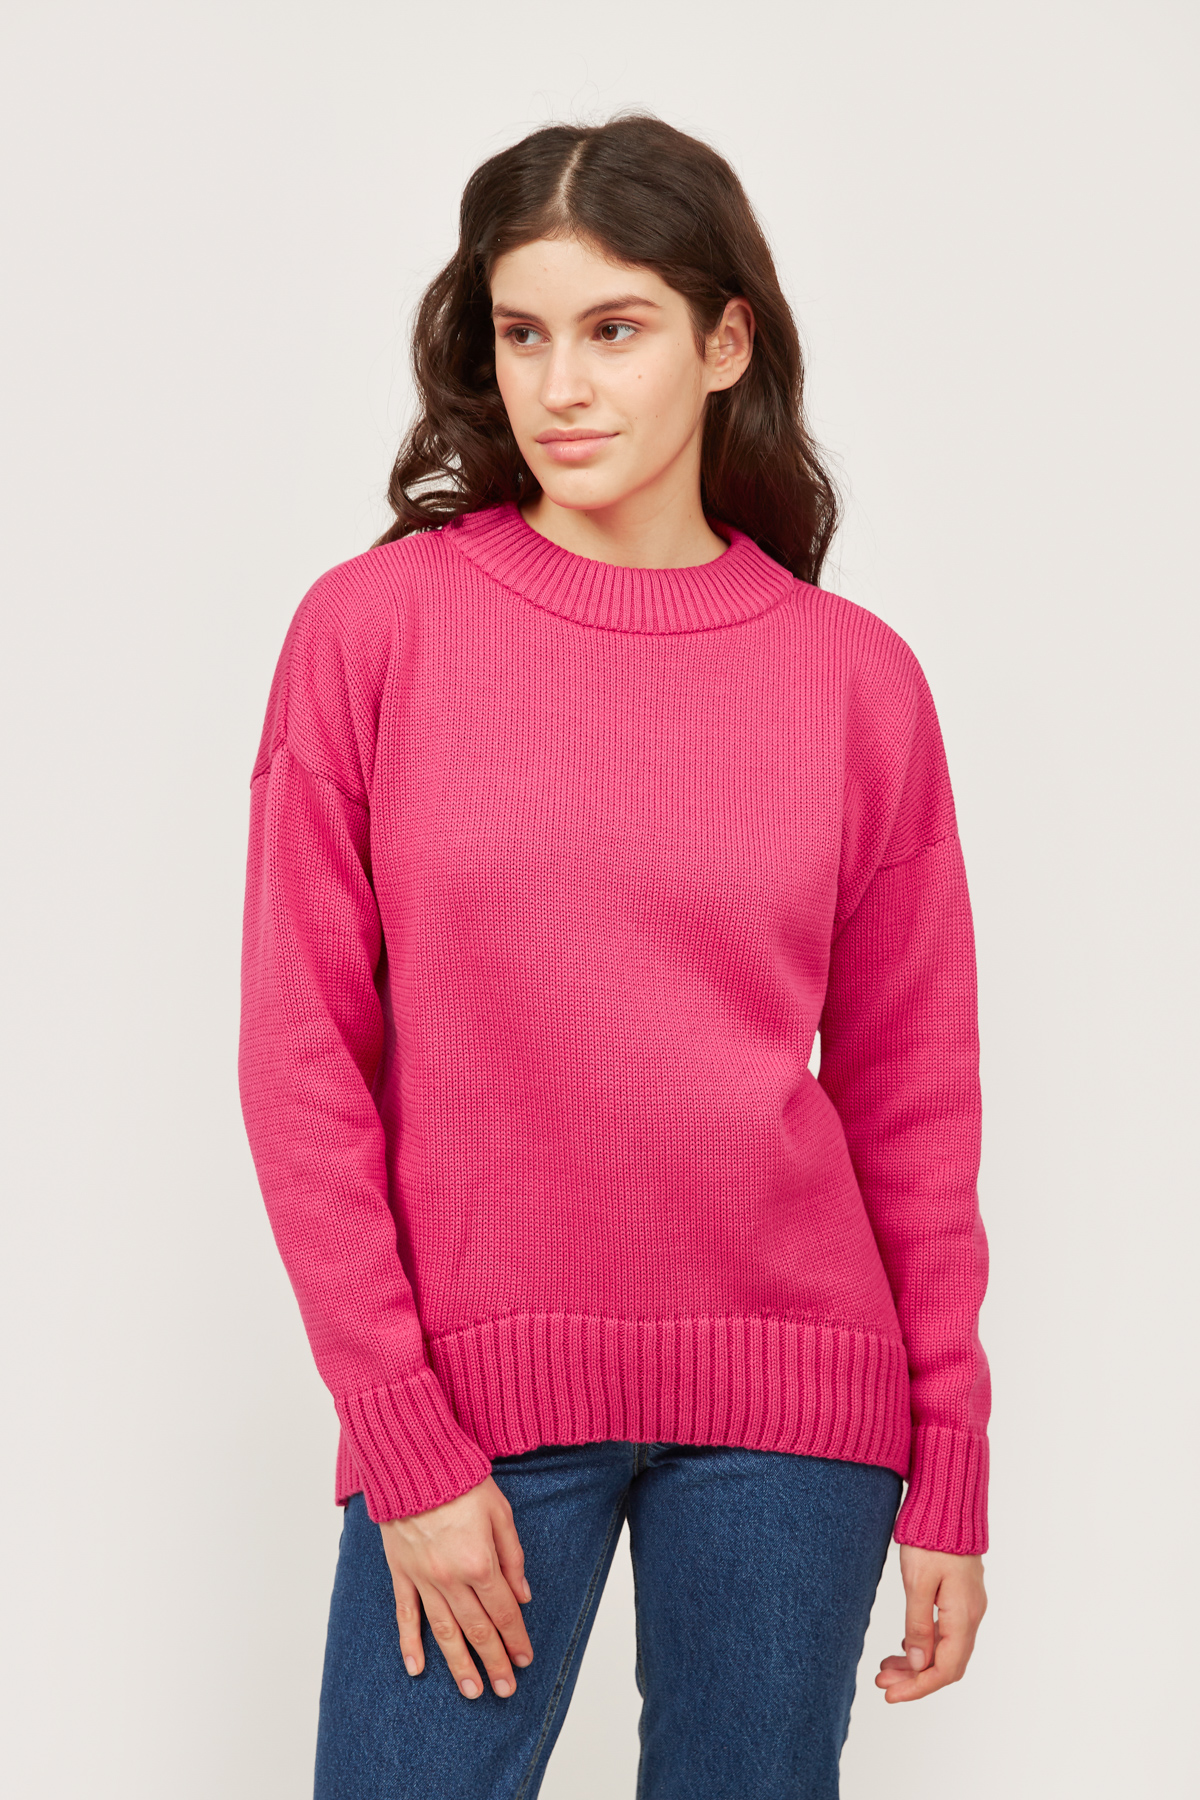 Хлопковый свитер цвета фуксии, фото 2